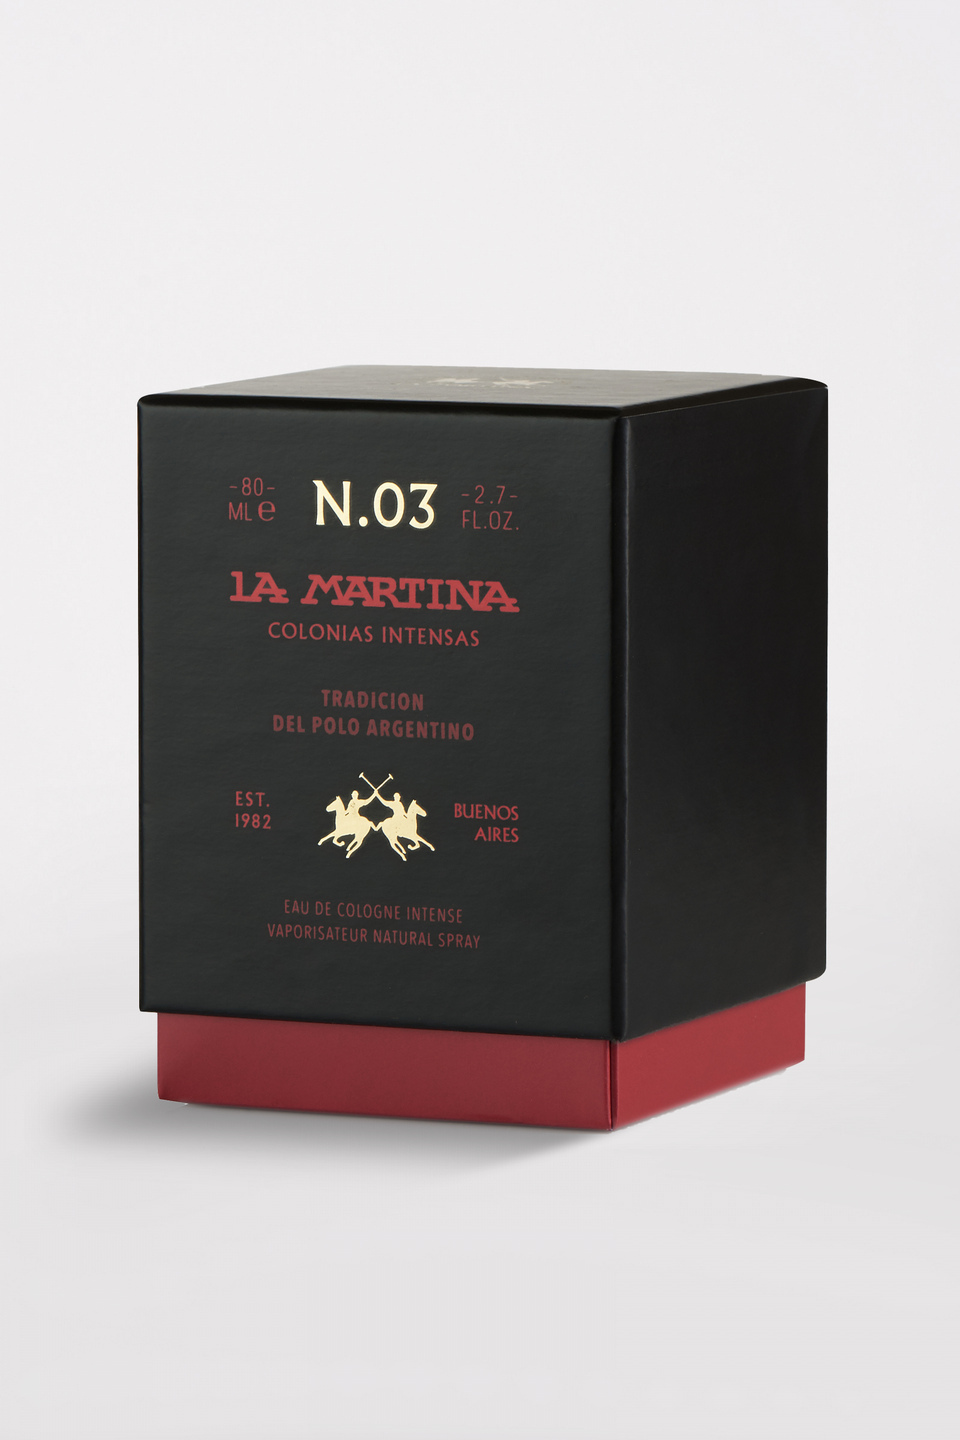 Fragranza unisex elegante e ricercata, con note floreali e agrumate - La Martina - Official Online Shop